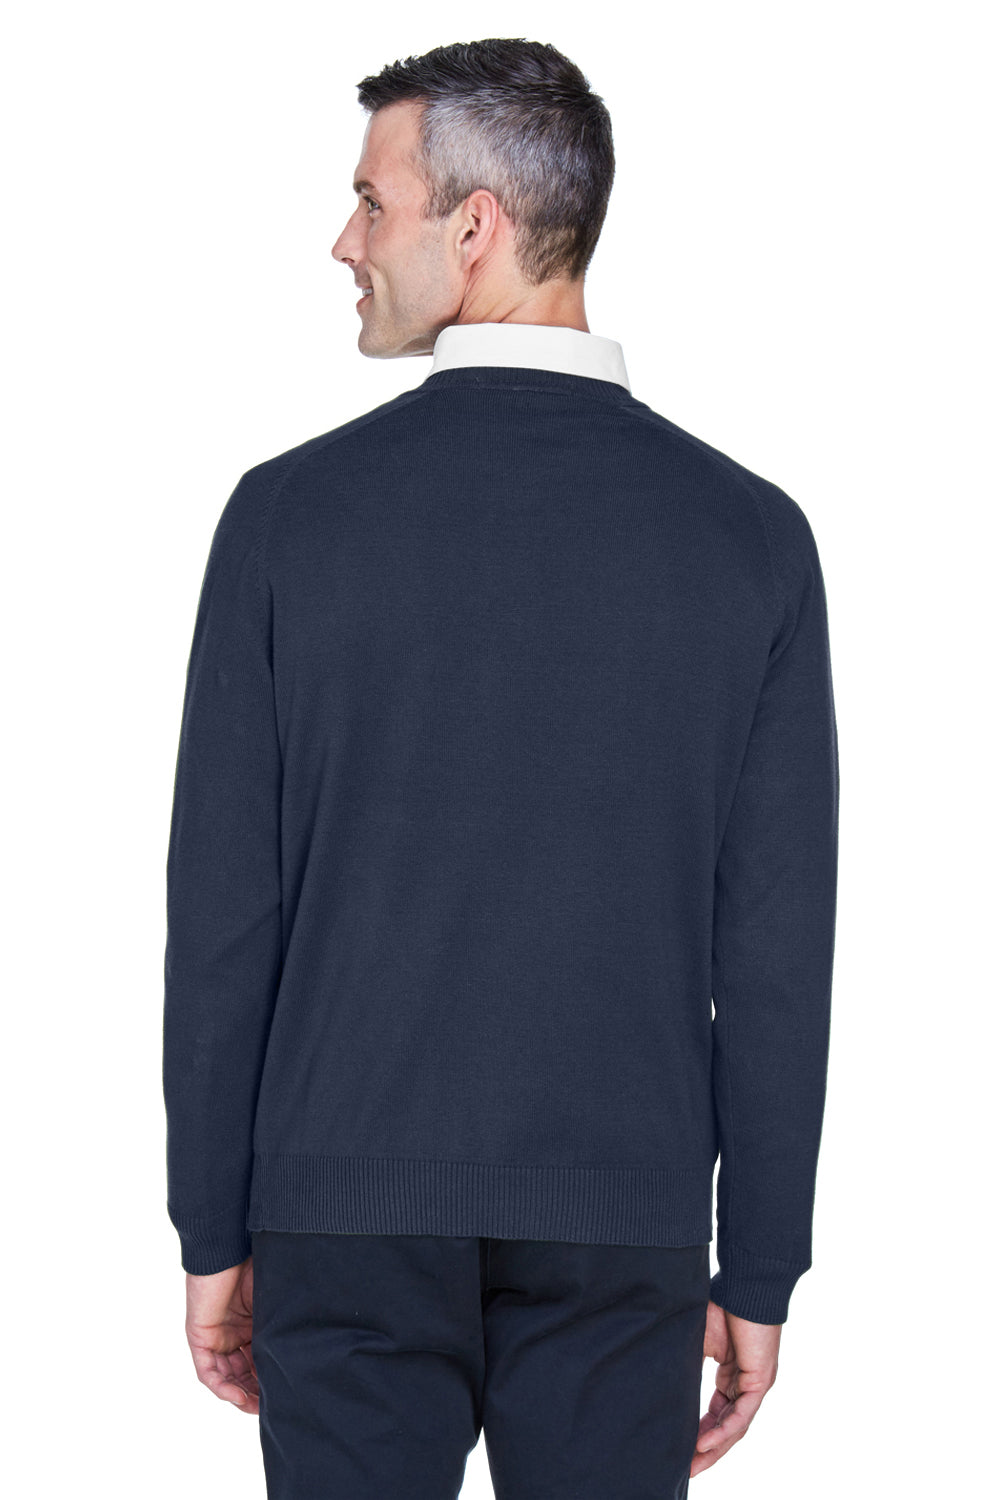 Devon & Jones D475 Mens Wrinkle Resistant V-Neck Sweater Navy Blue Back